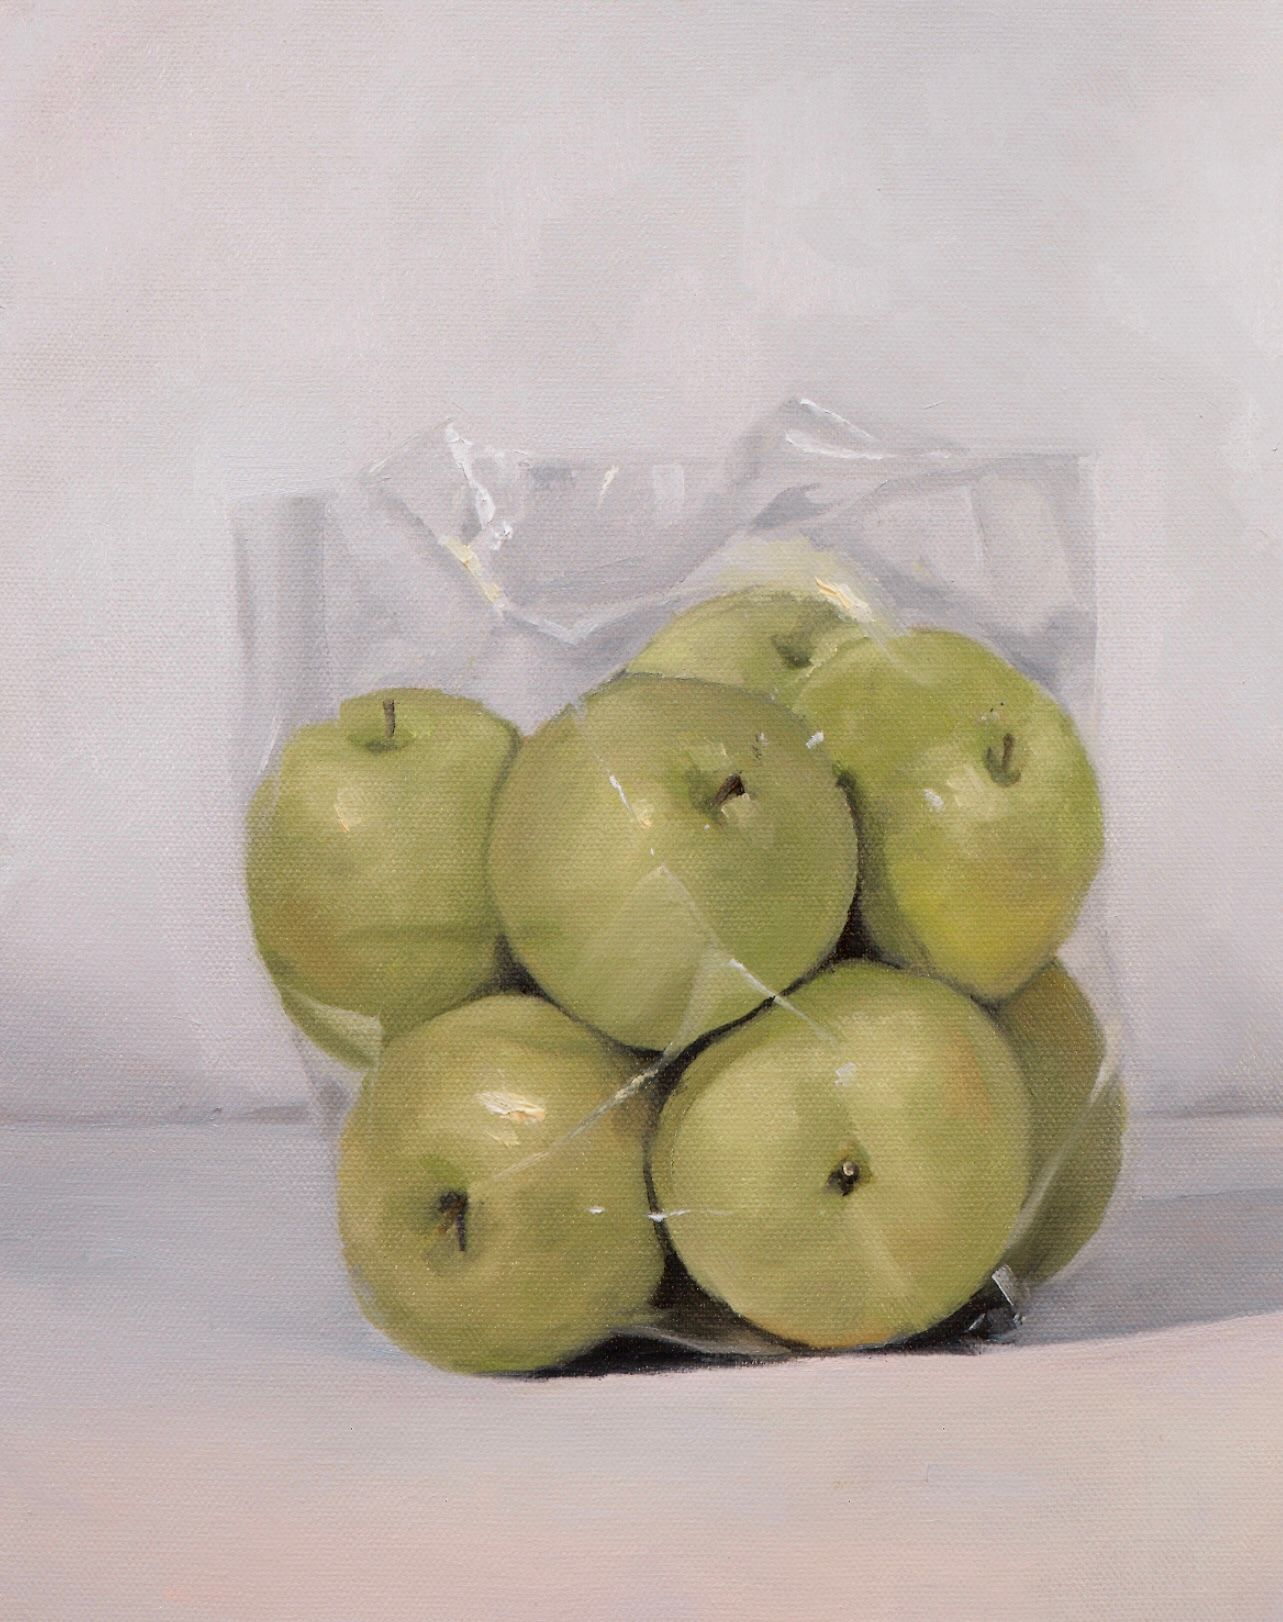 Bag of Green Apples